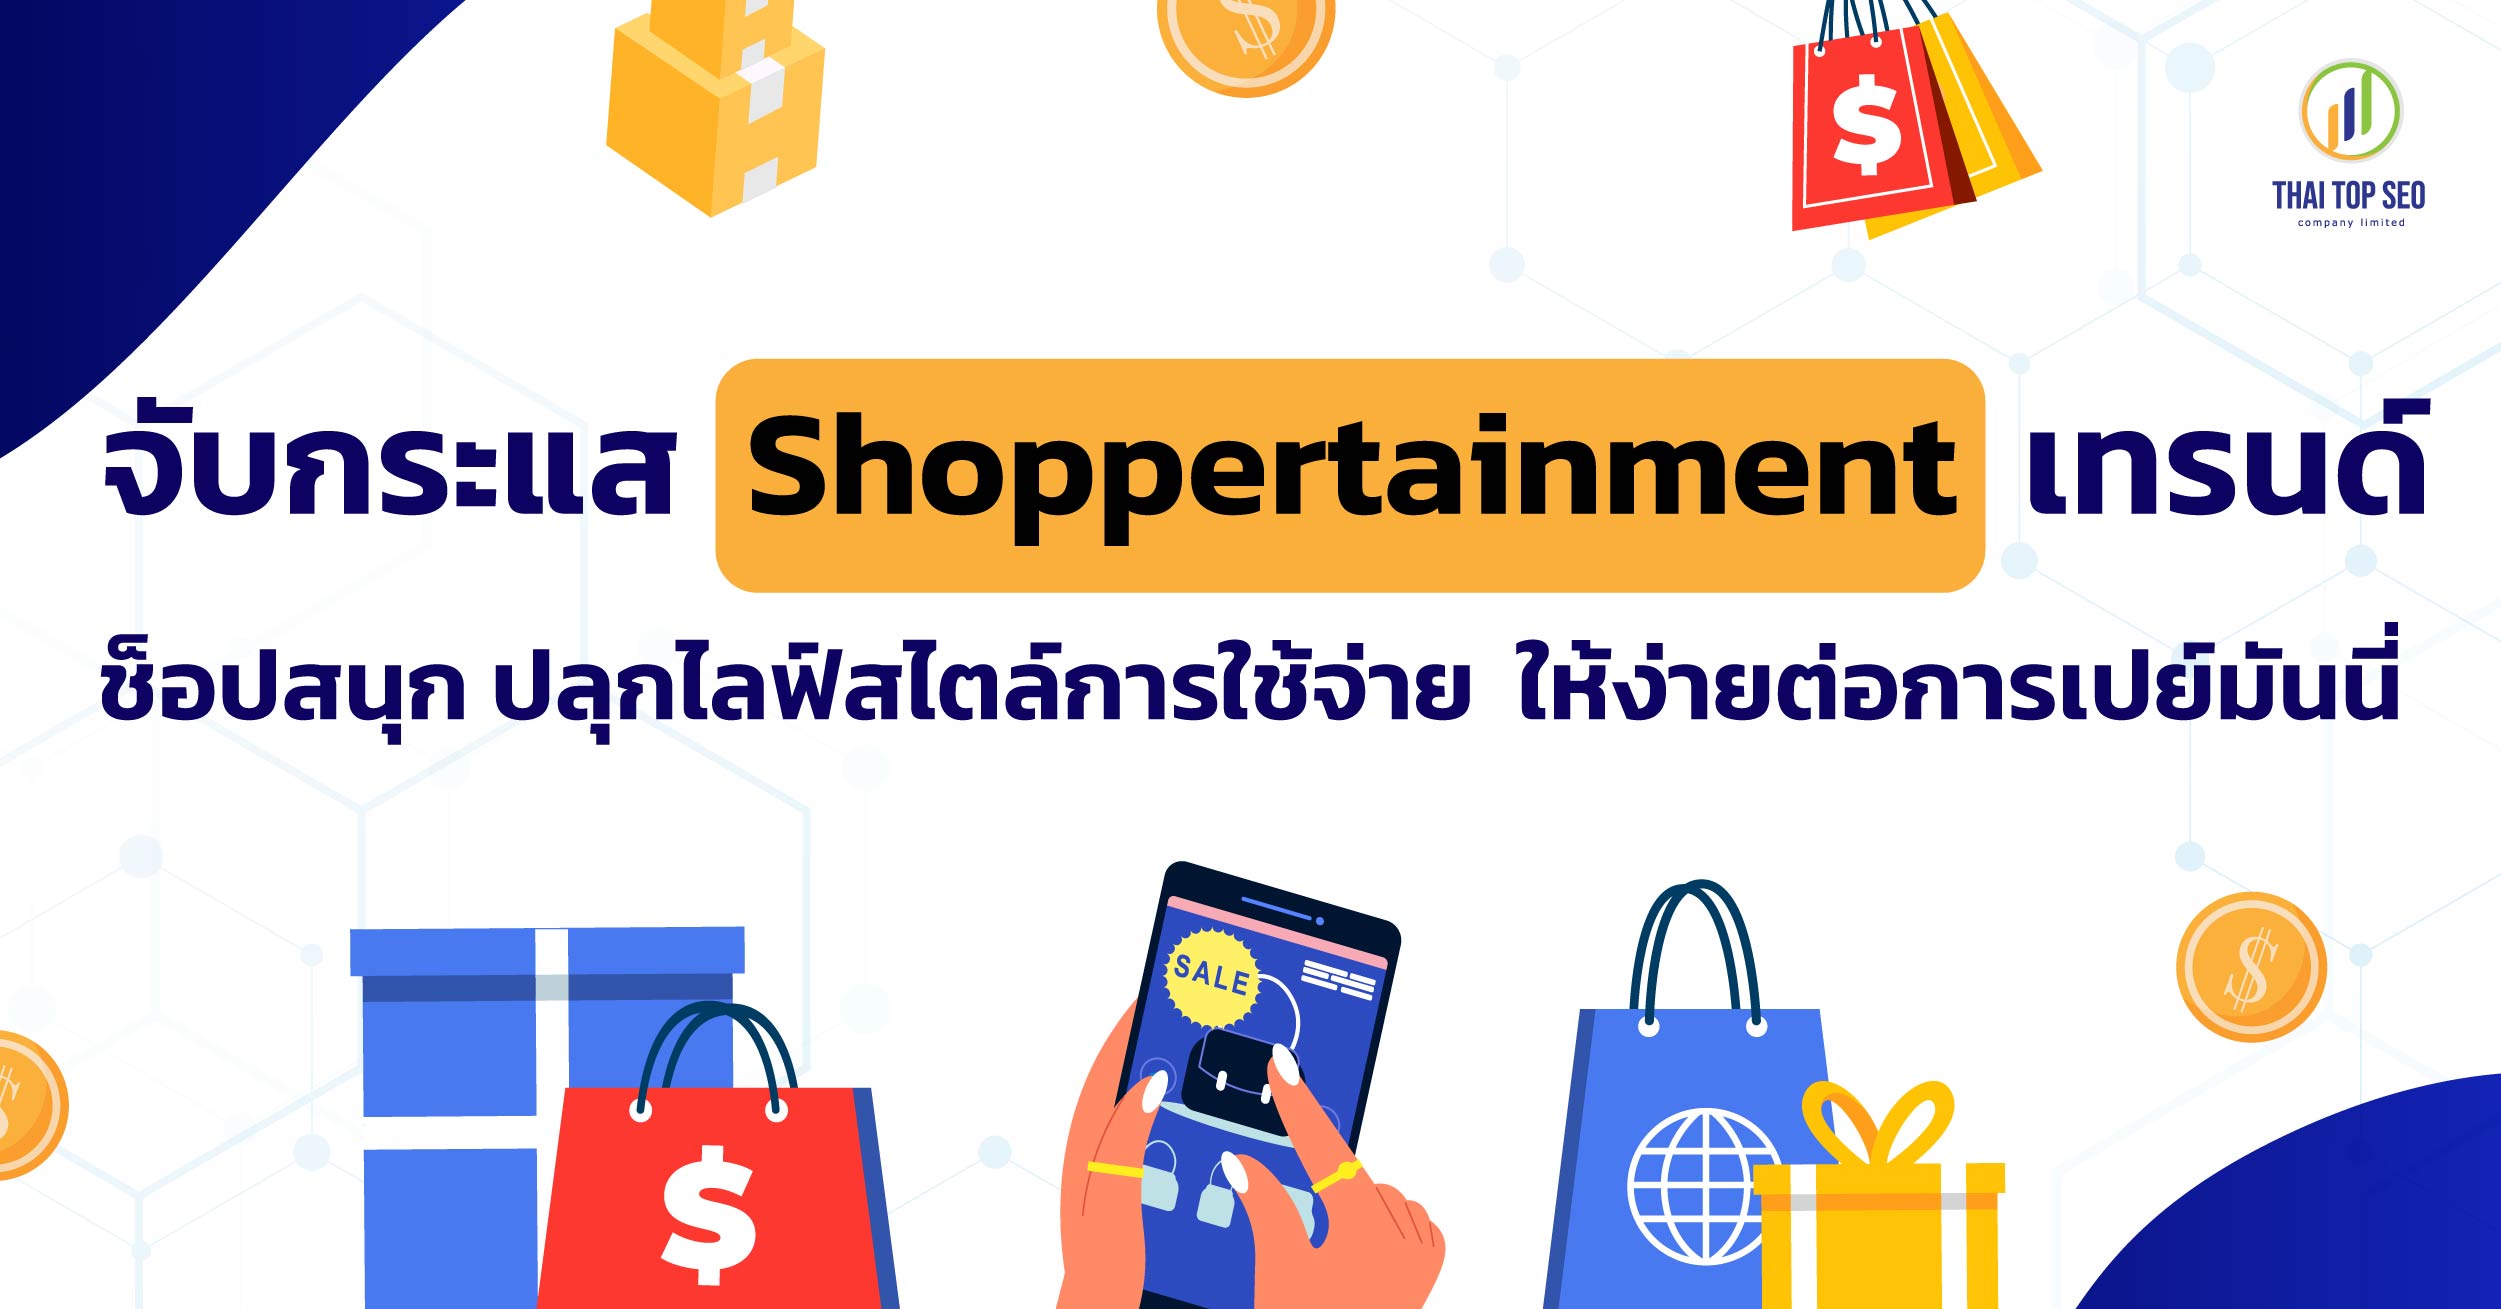 Shoppertainment1